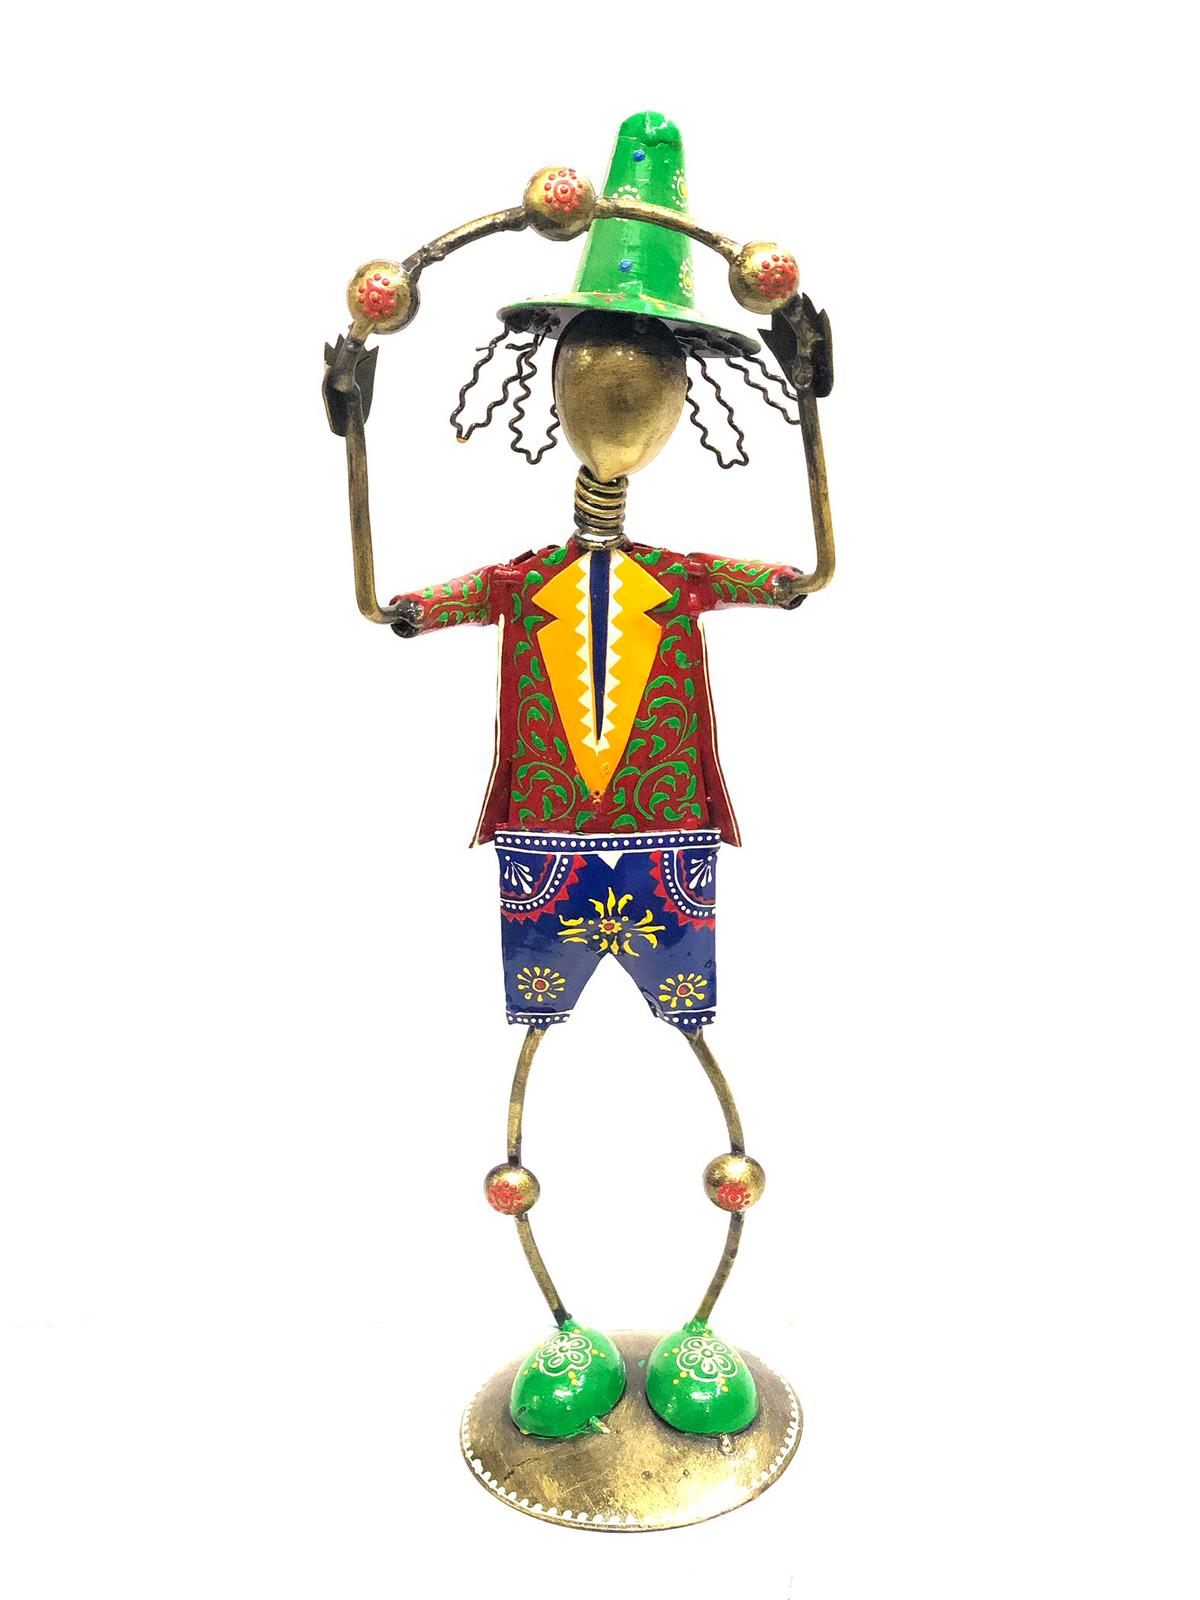 Circus Joker Metal Figurines Handcrafted Showpiece Home Décor Tamrapatra